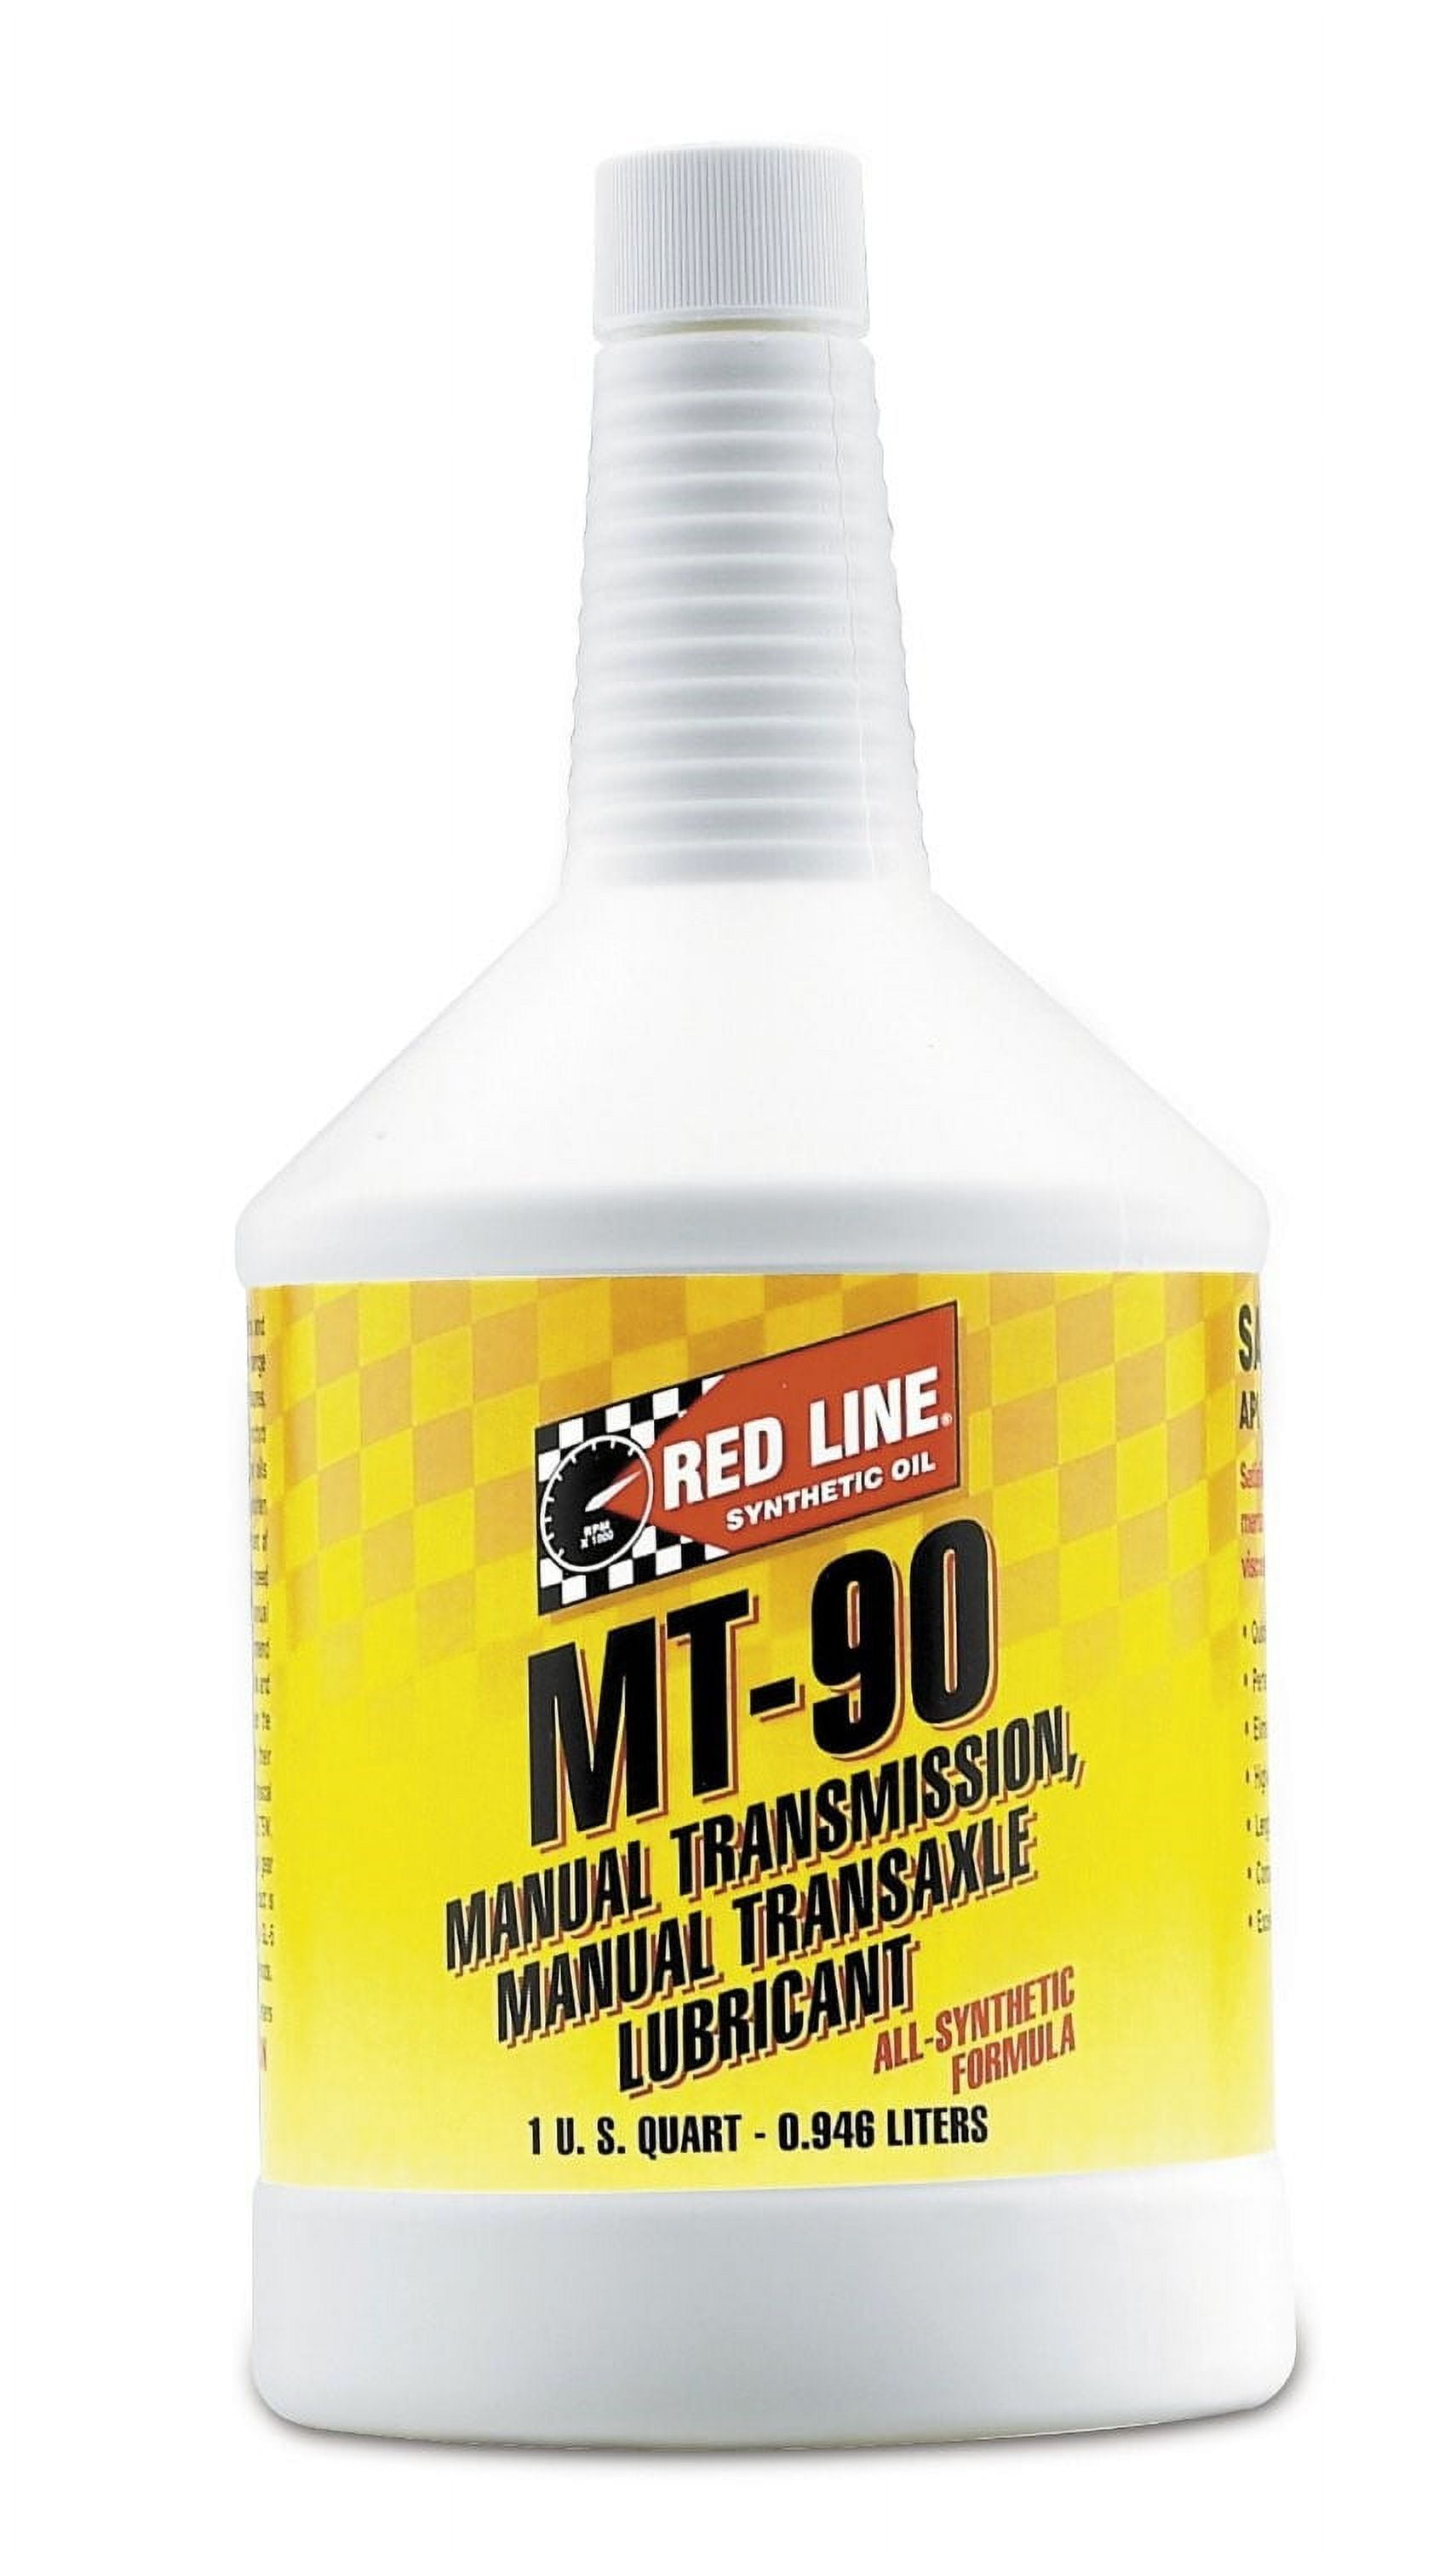 Red Line MT-LV 70W/75W GL-4 Gear Oil